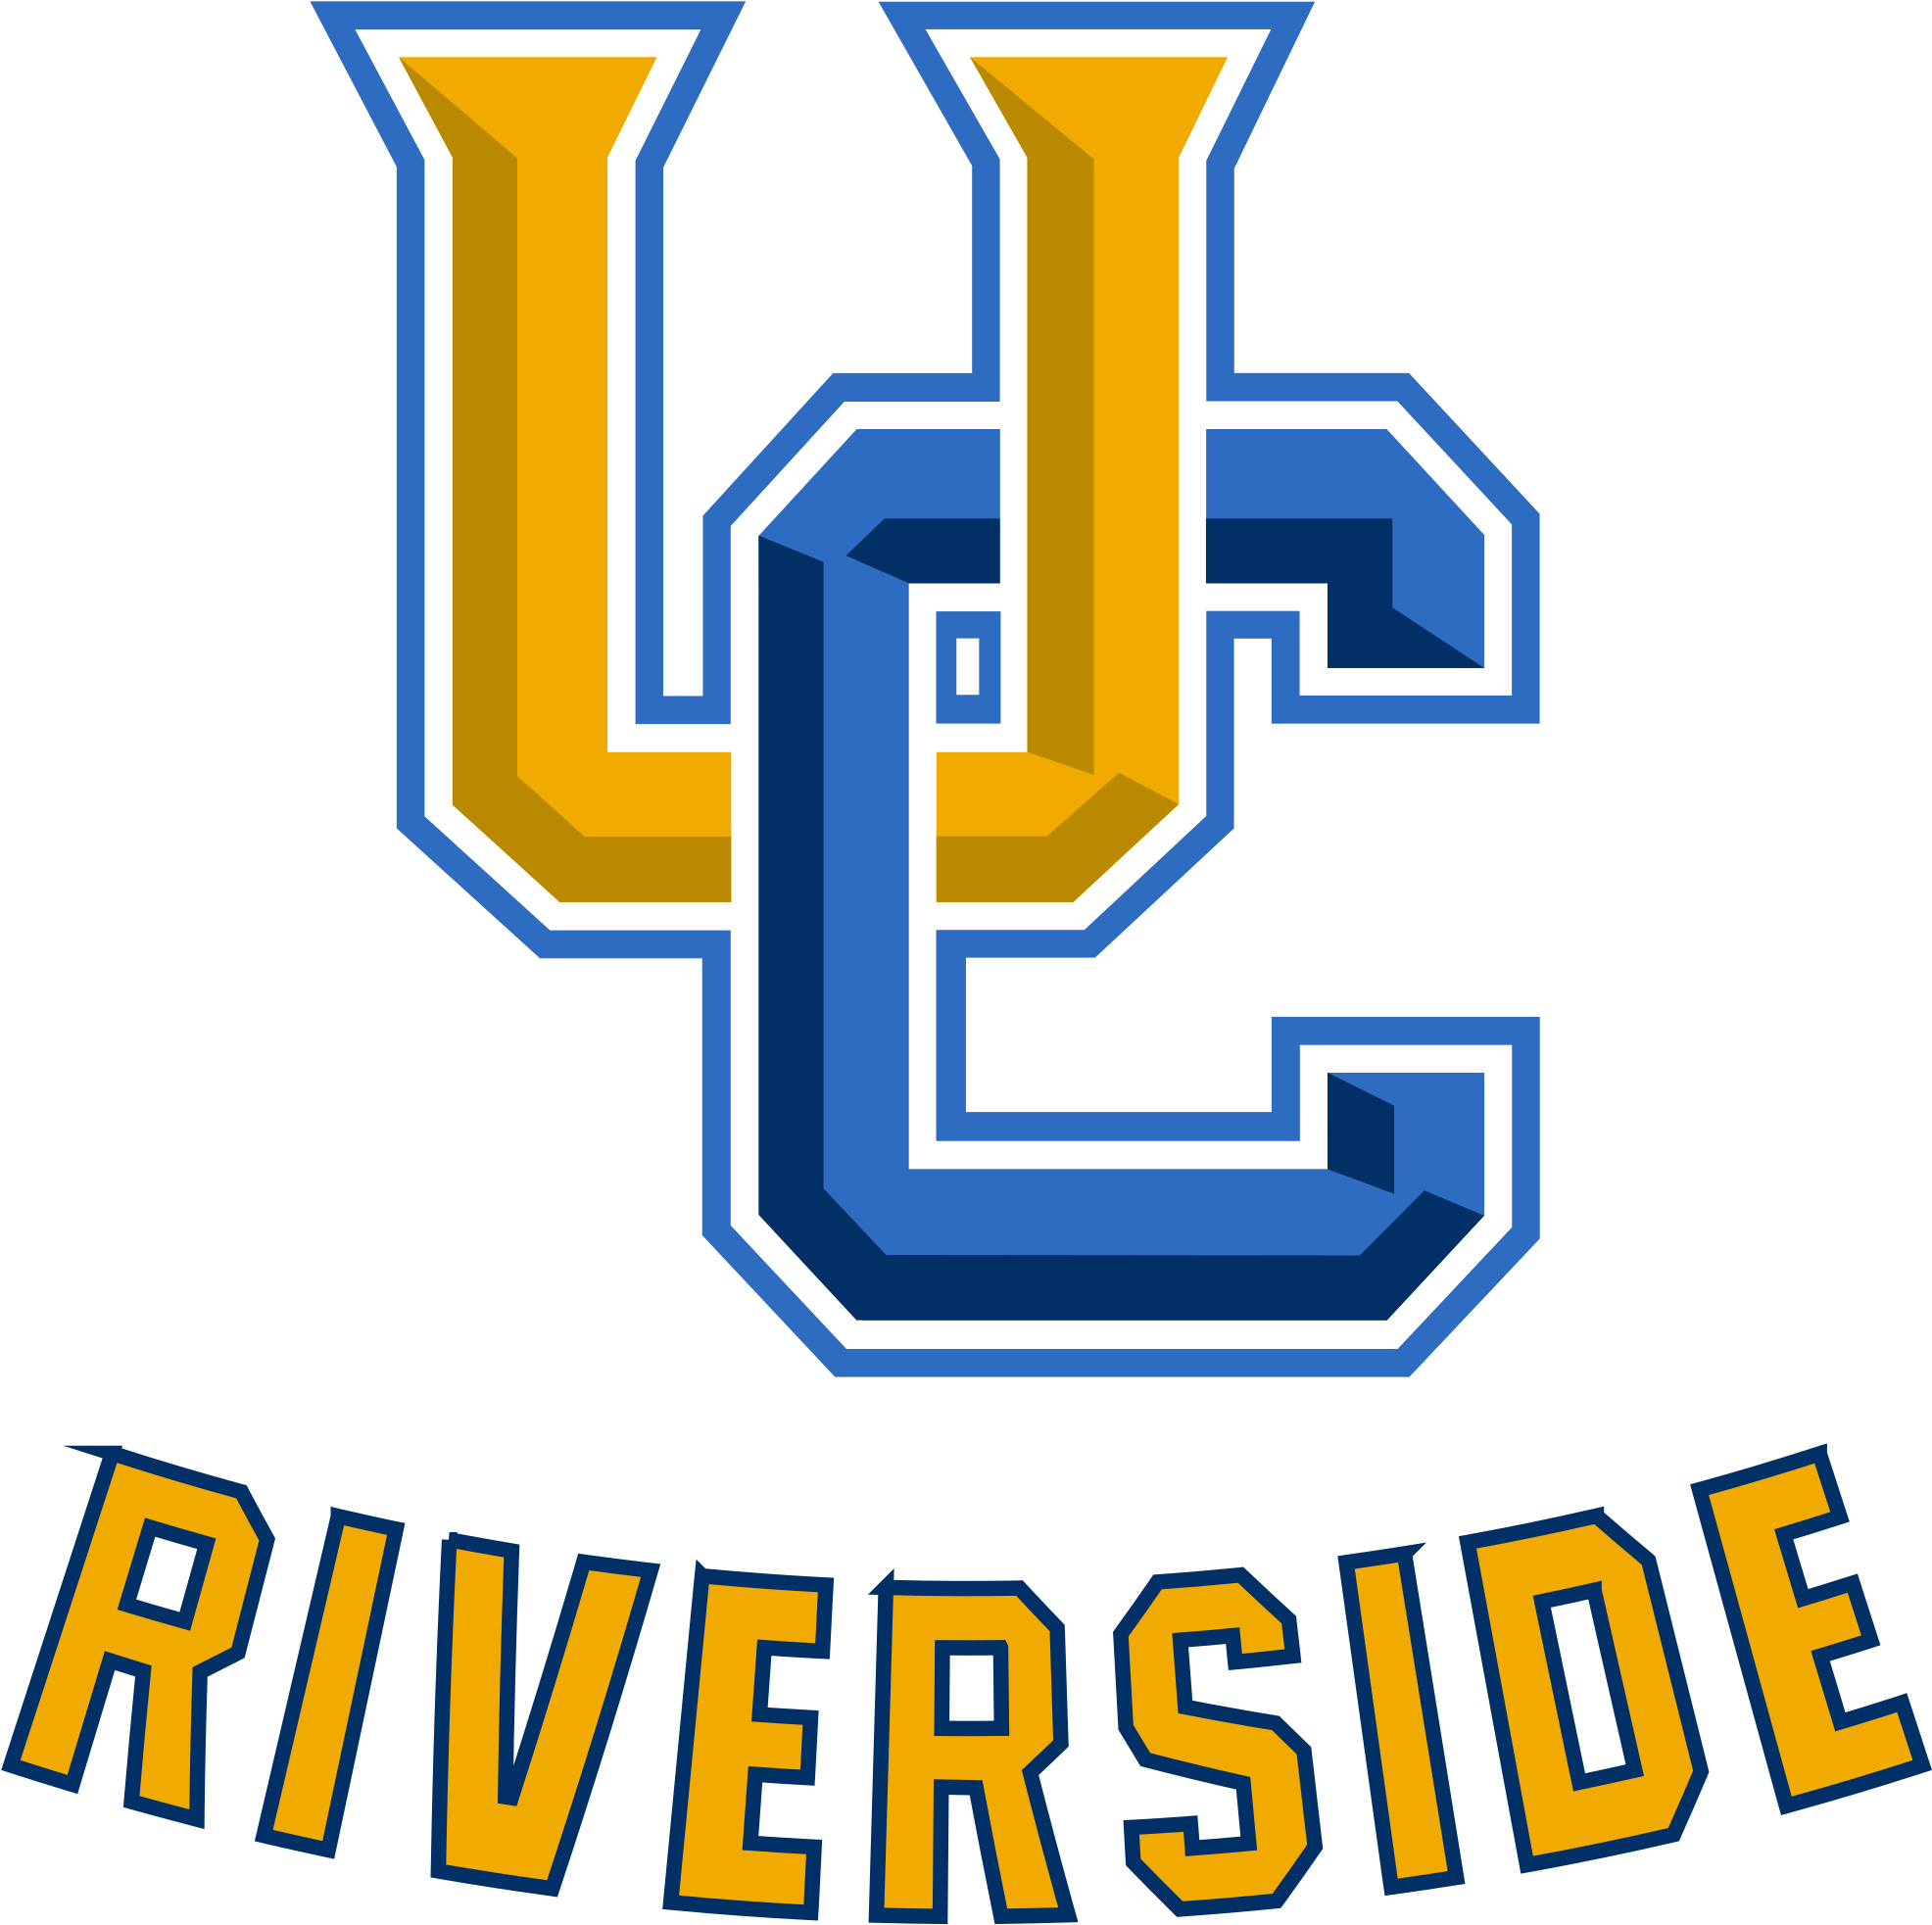 Uc Browser Logo Png - University Of California Riverside Colors (2000x2000), Png Download